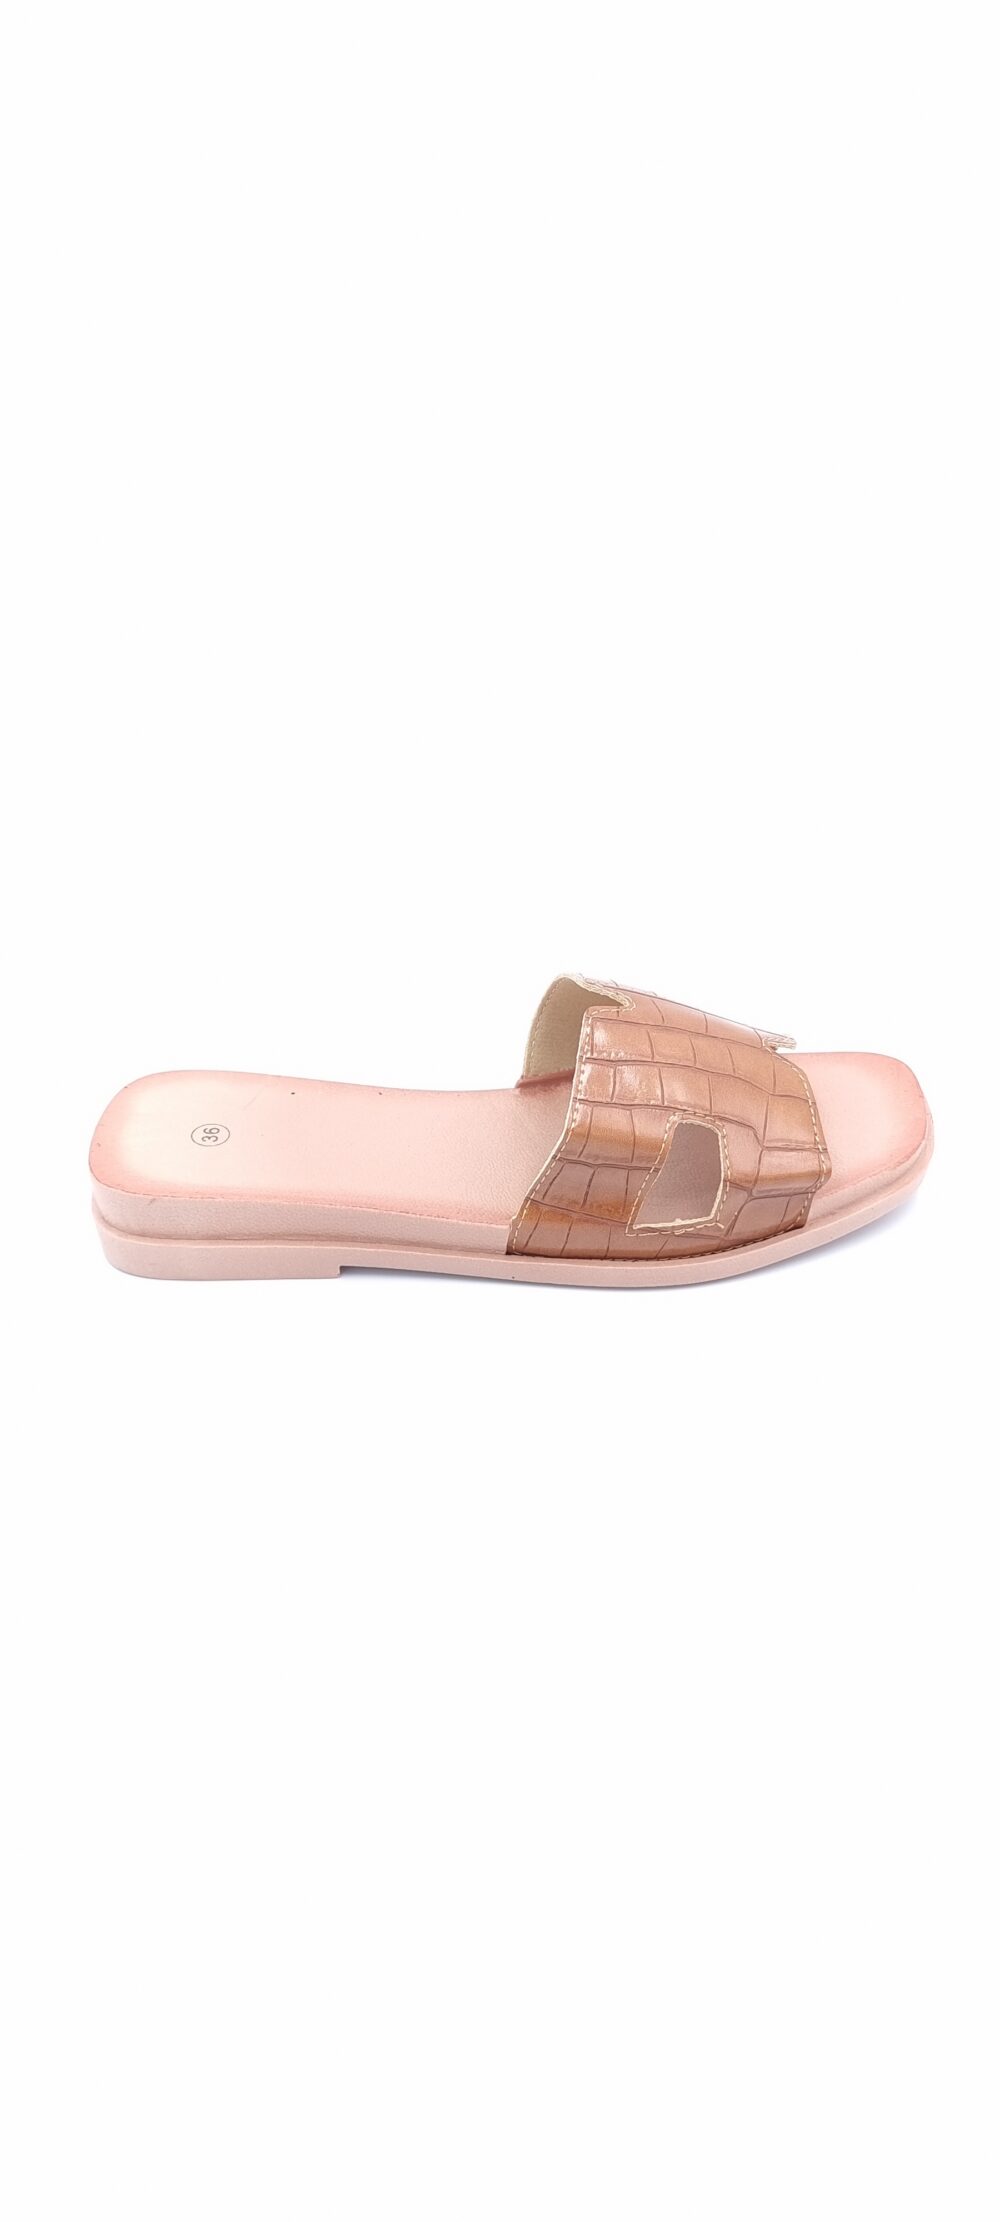 Crocodile brown slipper sandal